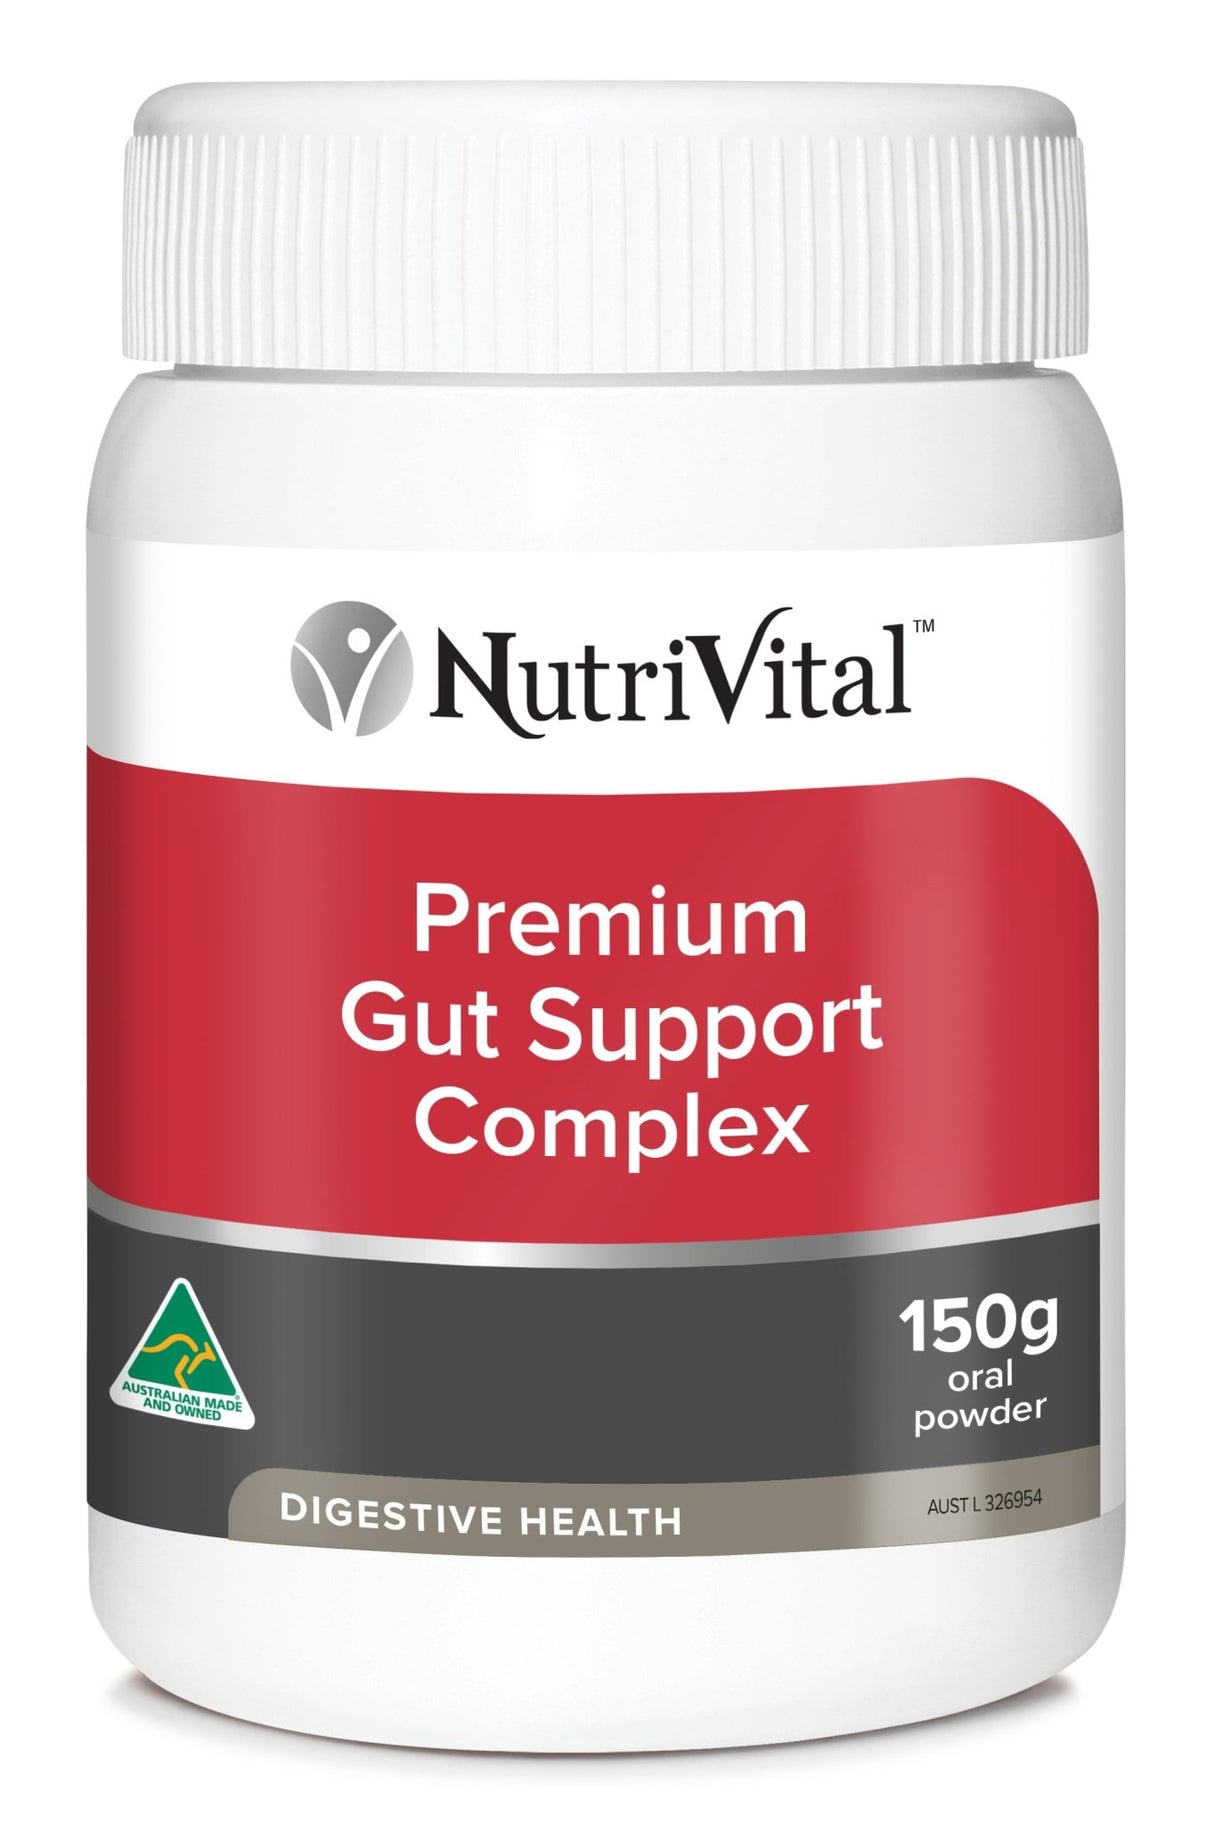 NutriVital Premium Gut Support Complex Powder 150g Powder - Dr Earth - Supplements, Nutrivital